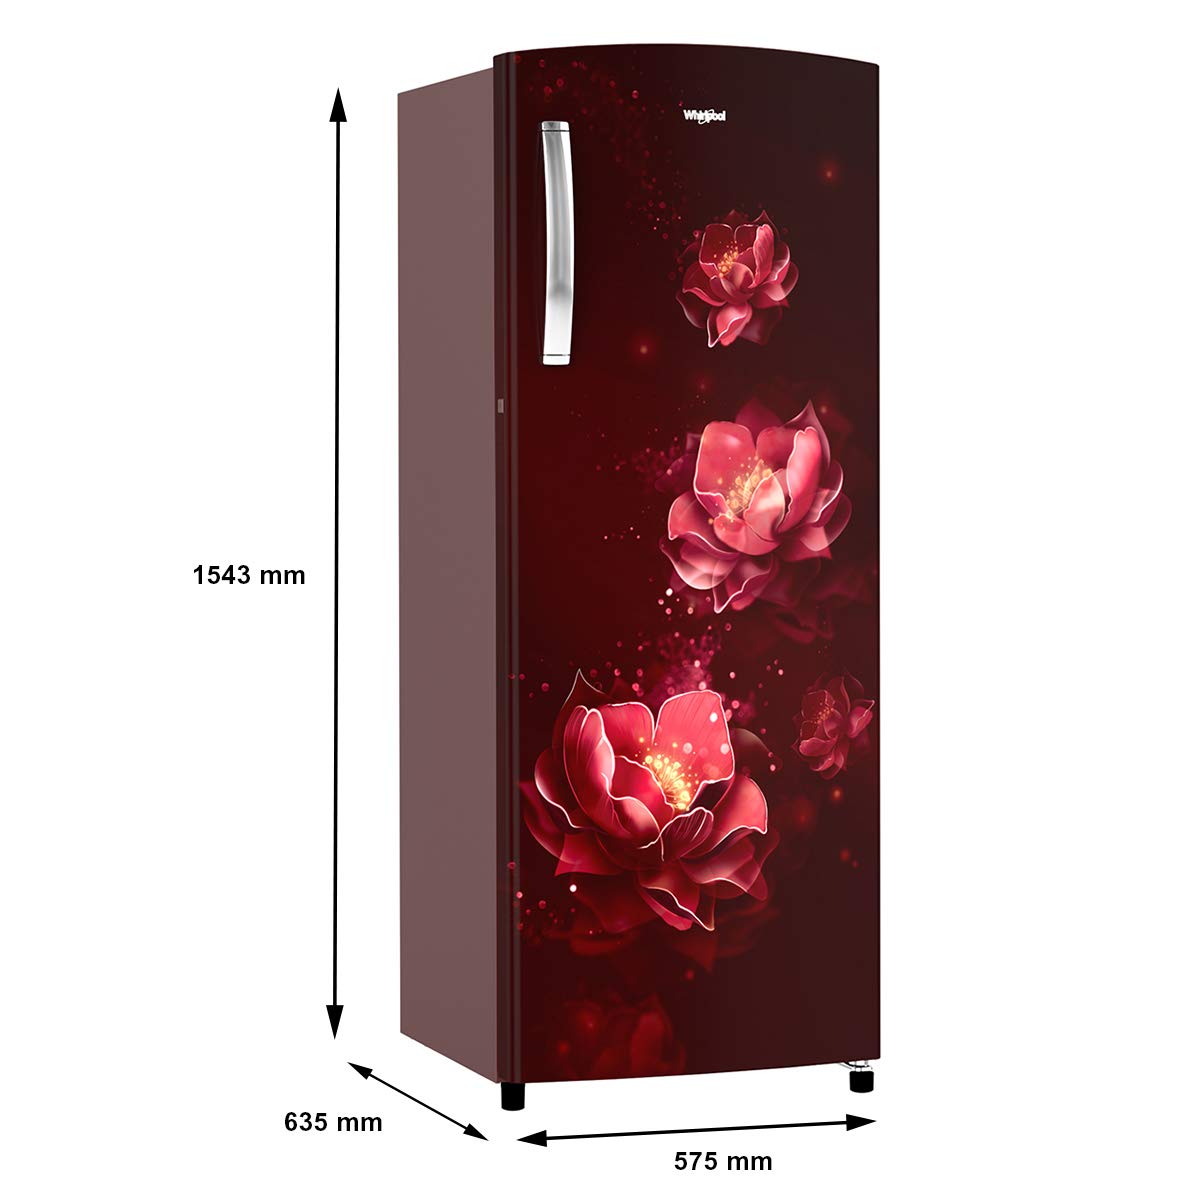 Whirlpool 280 L 3 Star Direct-Cool Single Door Refrigerator (305 IMPRO PLUS PRM 3S WINE ABYSS, Alpha Steel)